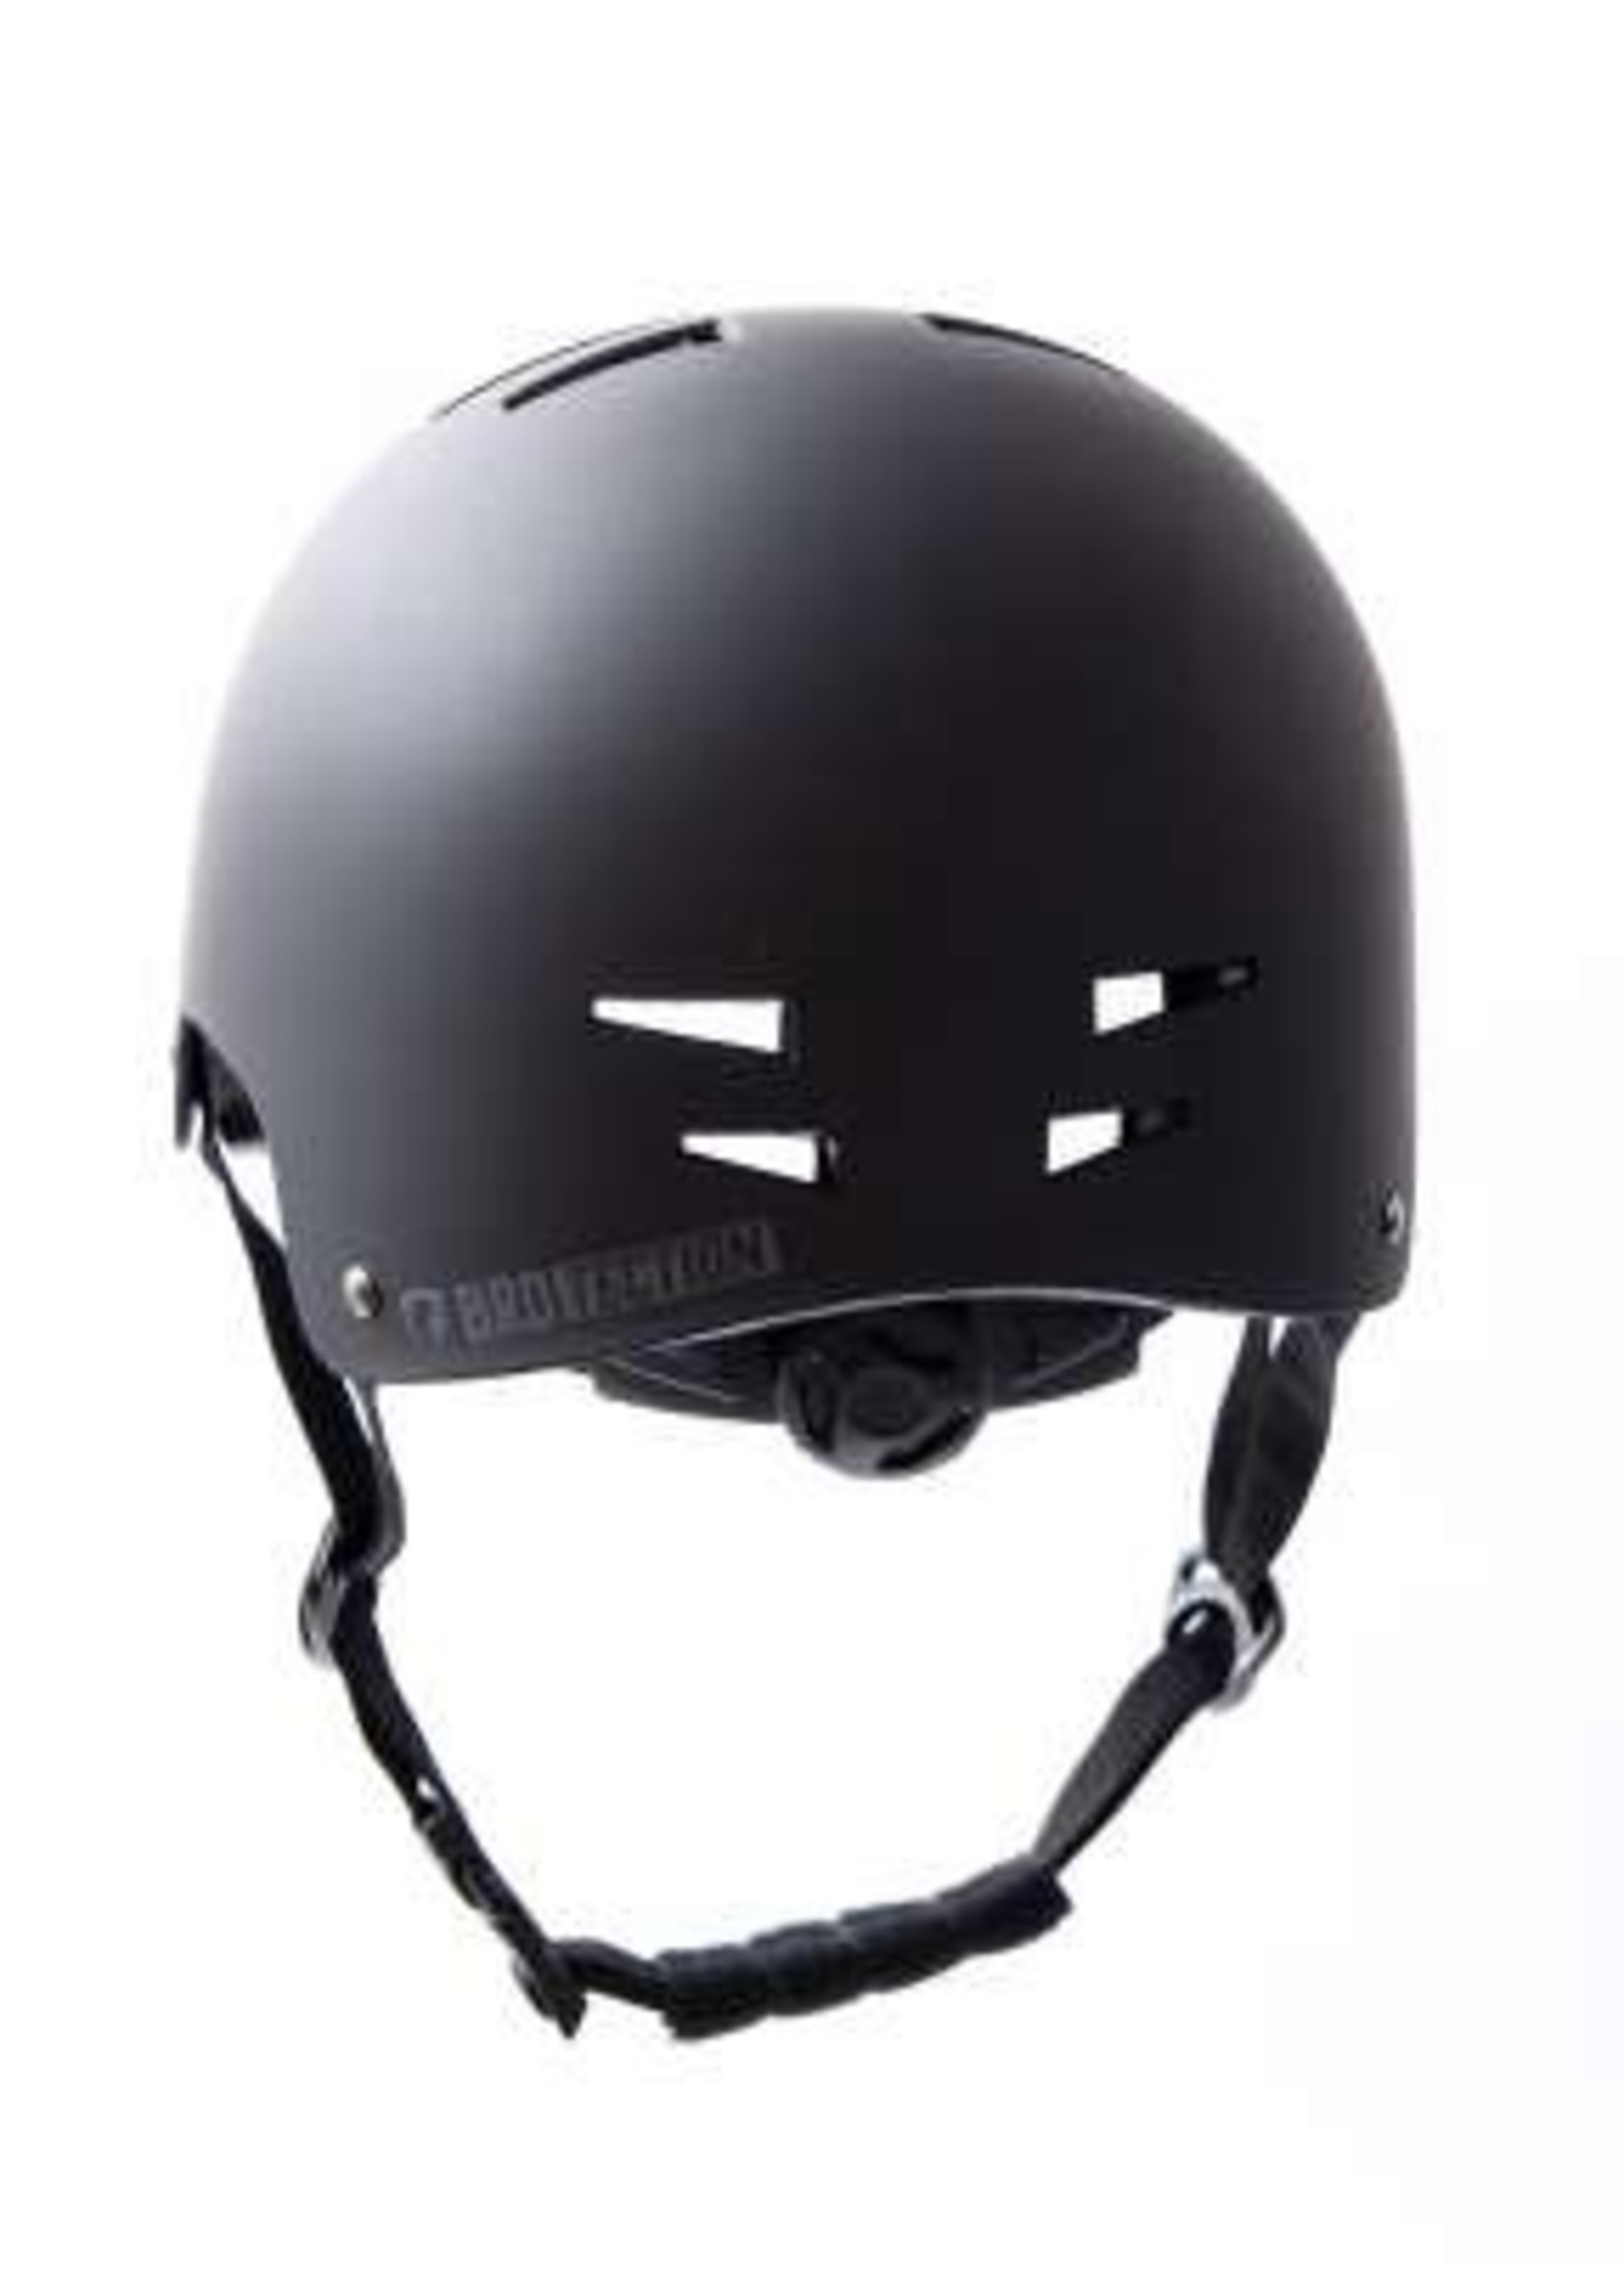 BroTection Helmet